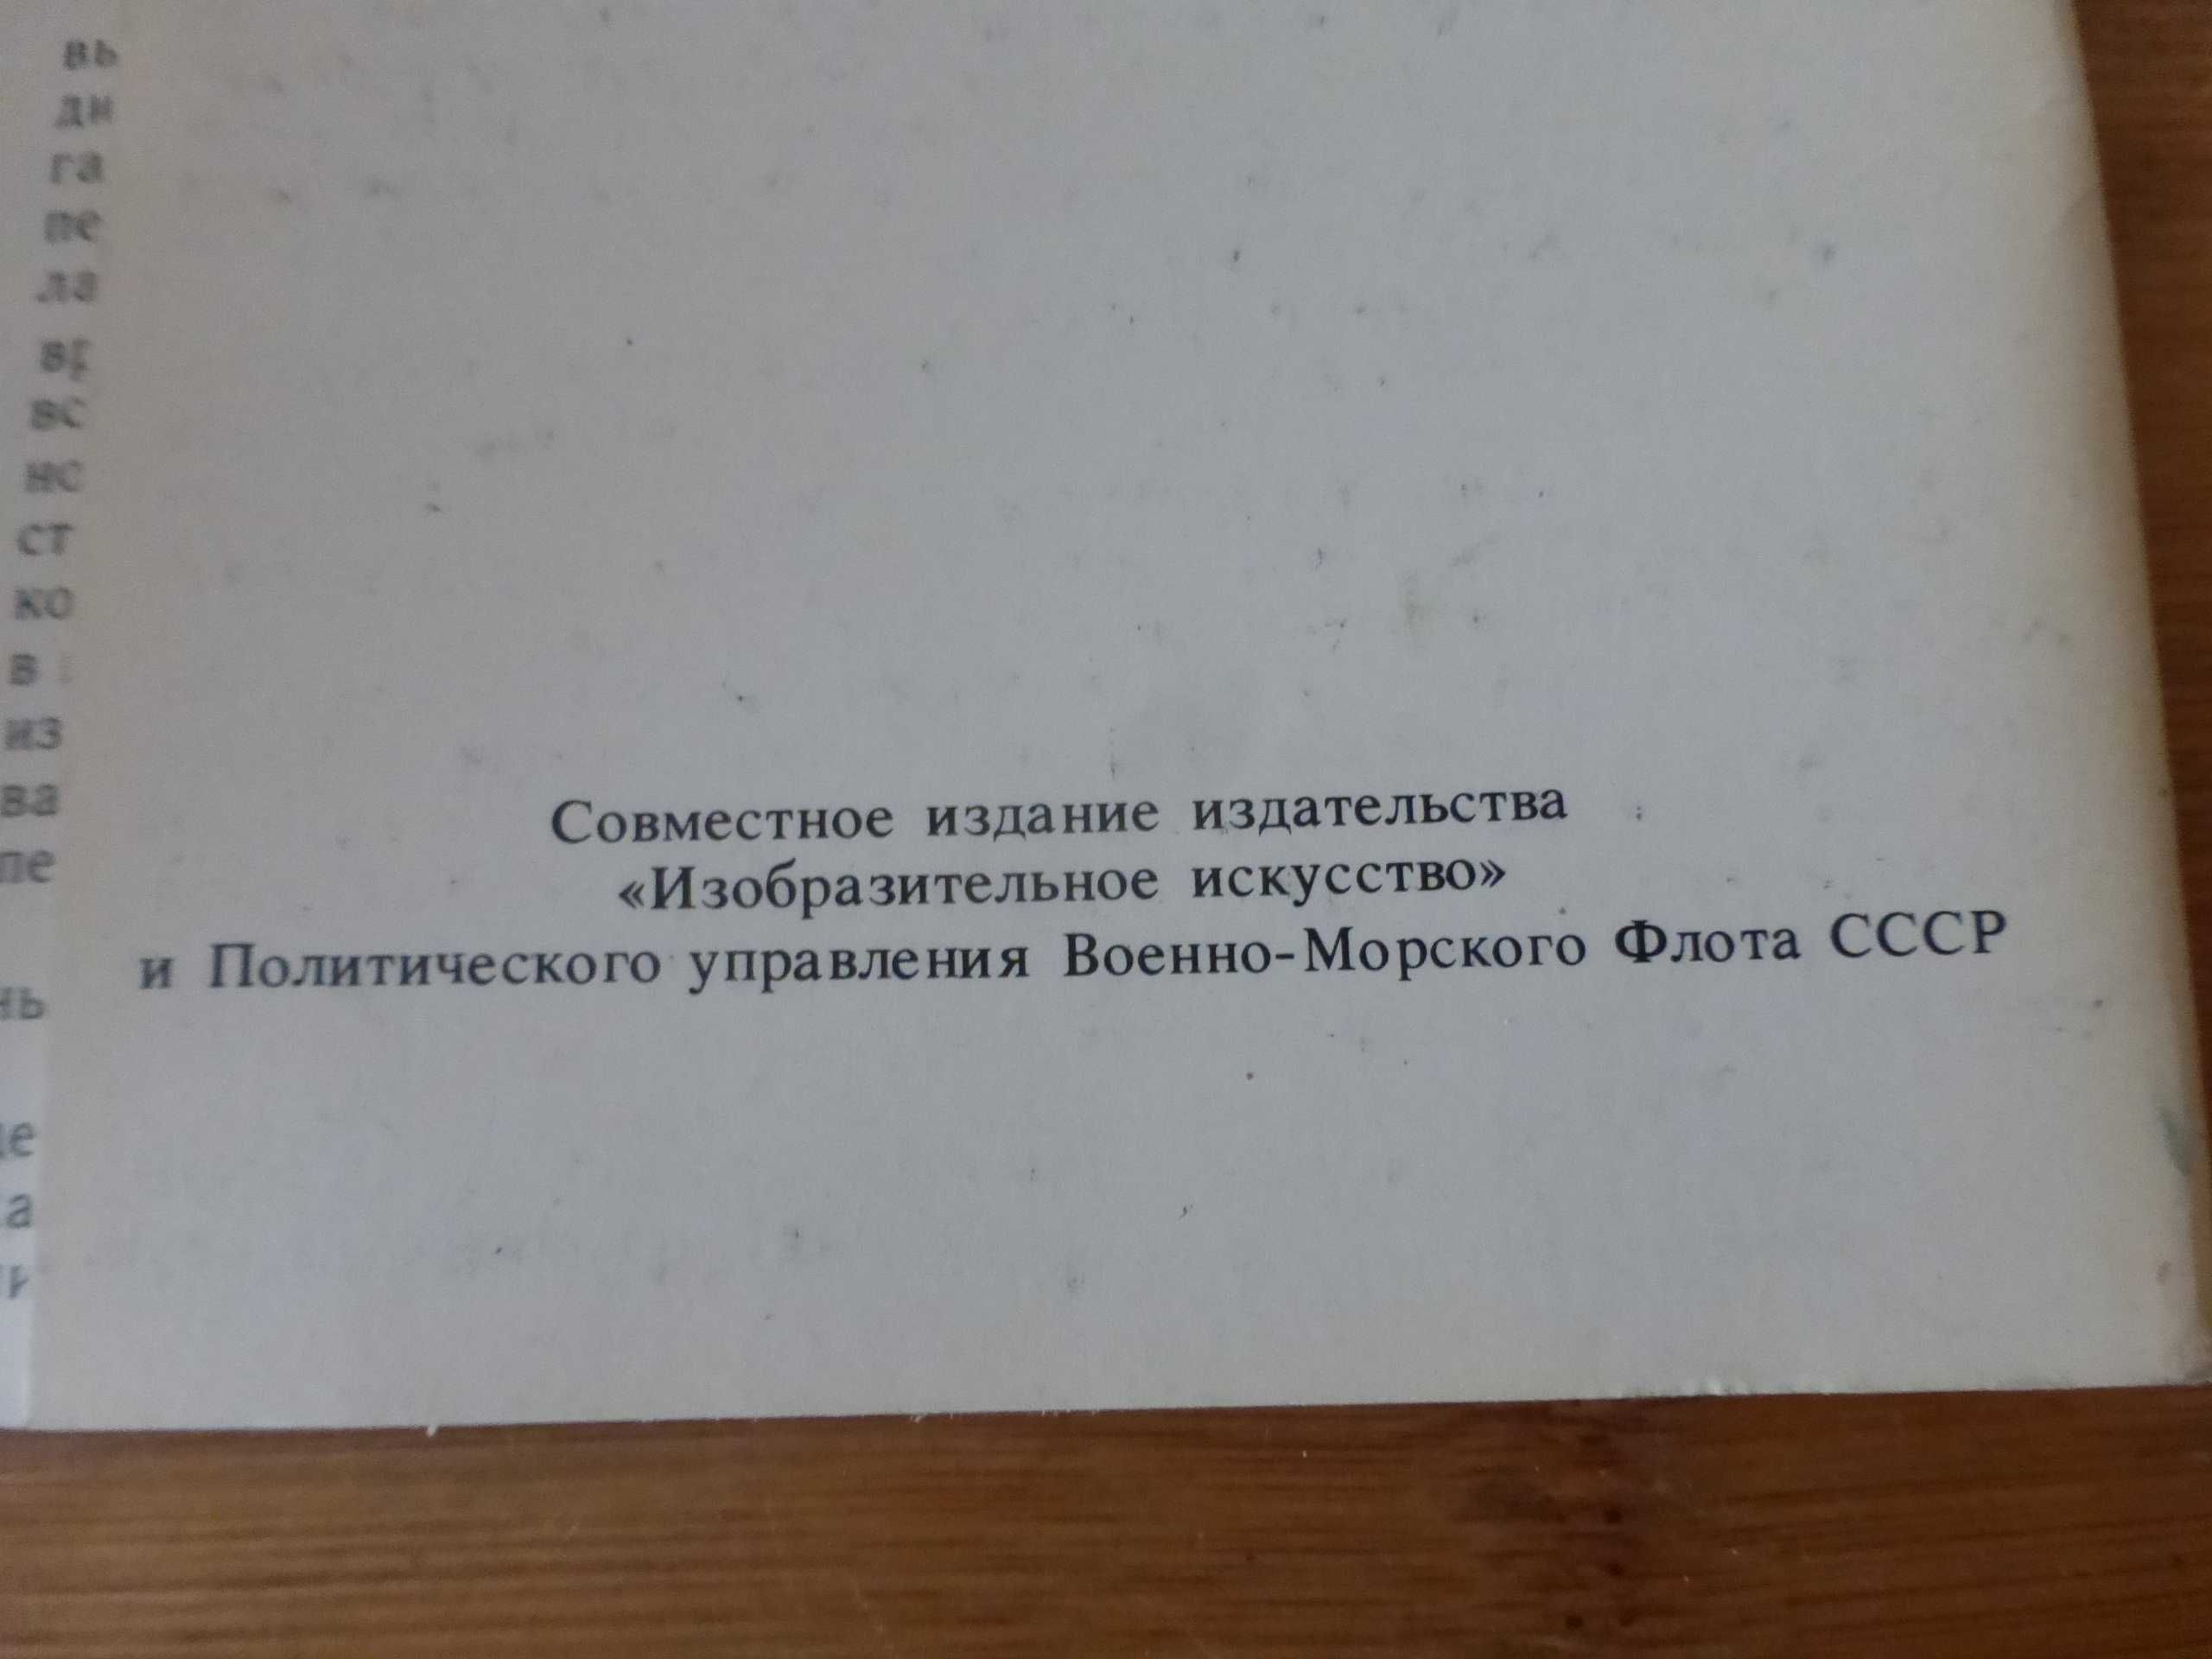 Руски комплект картички с руски кораби герои 16 бр 1982 г